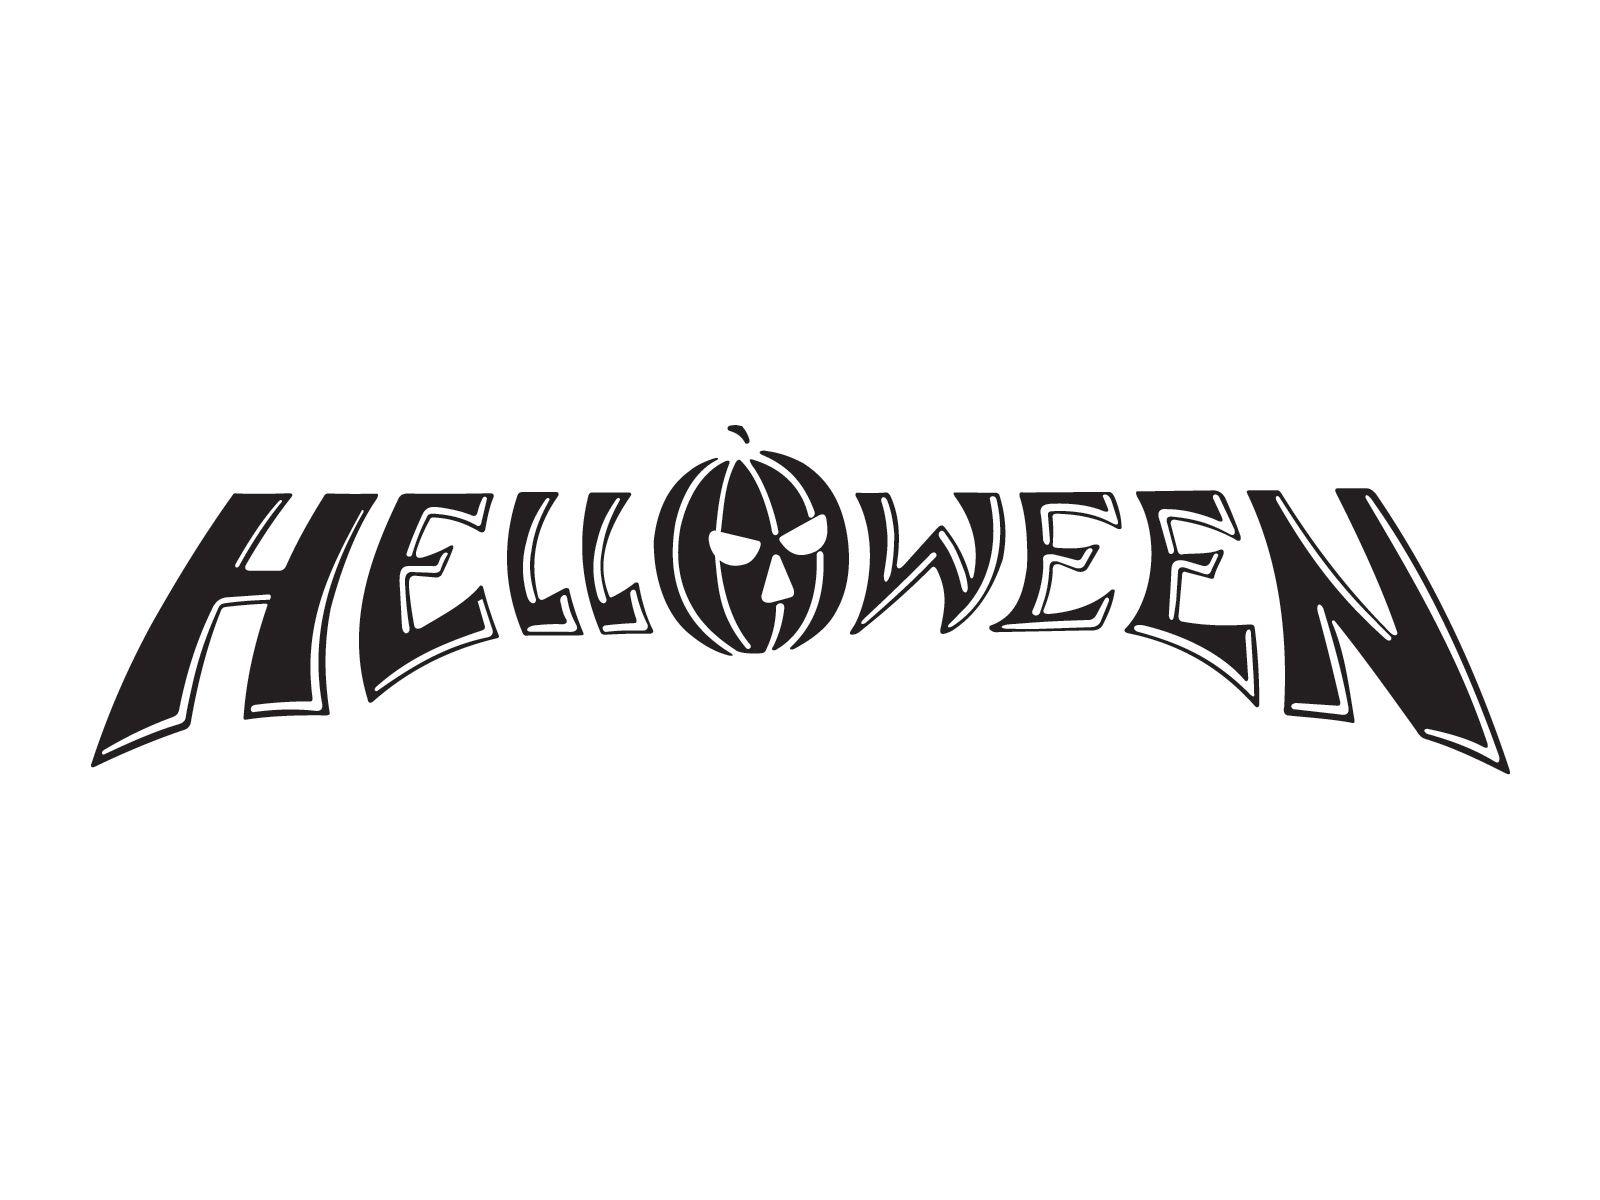 Helloween logo wallpaper. Band logos band logos, metal bands